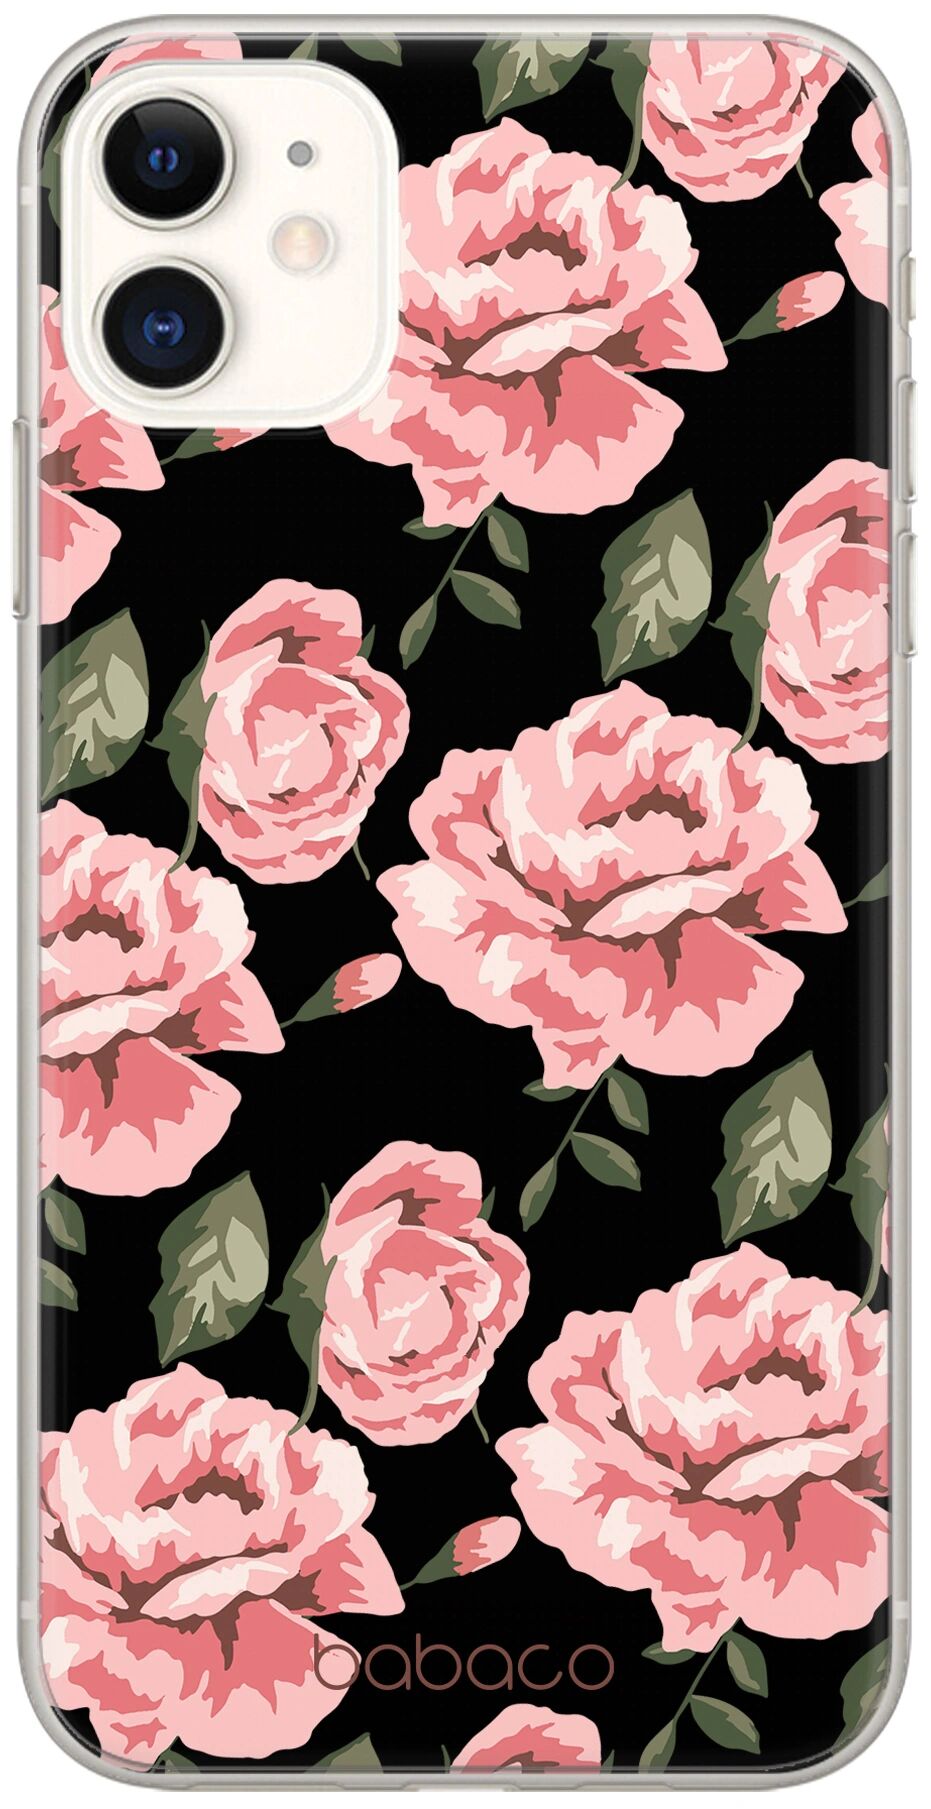 Babaco Ochranný kryt pro iPhone 7 / 8 / SE (2020) - Babaco, Flowers 013 Black